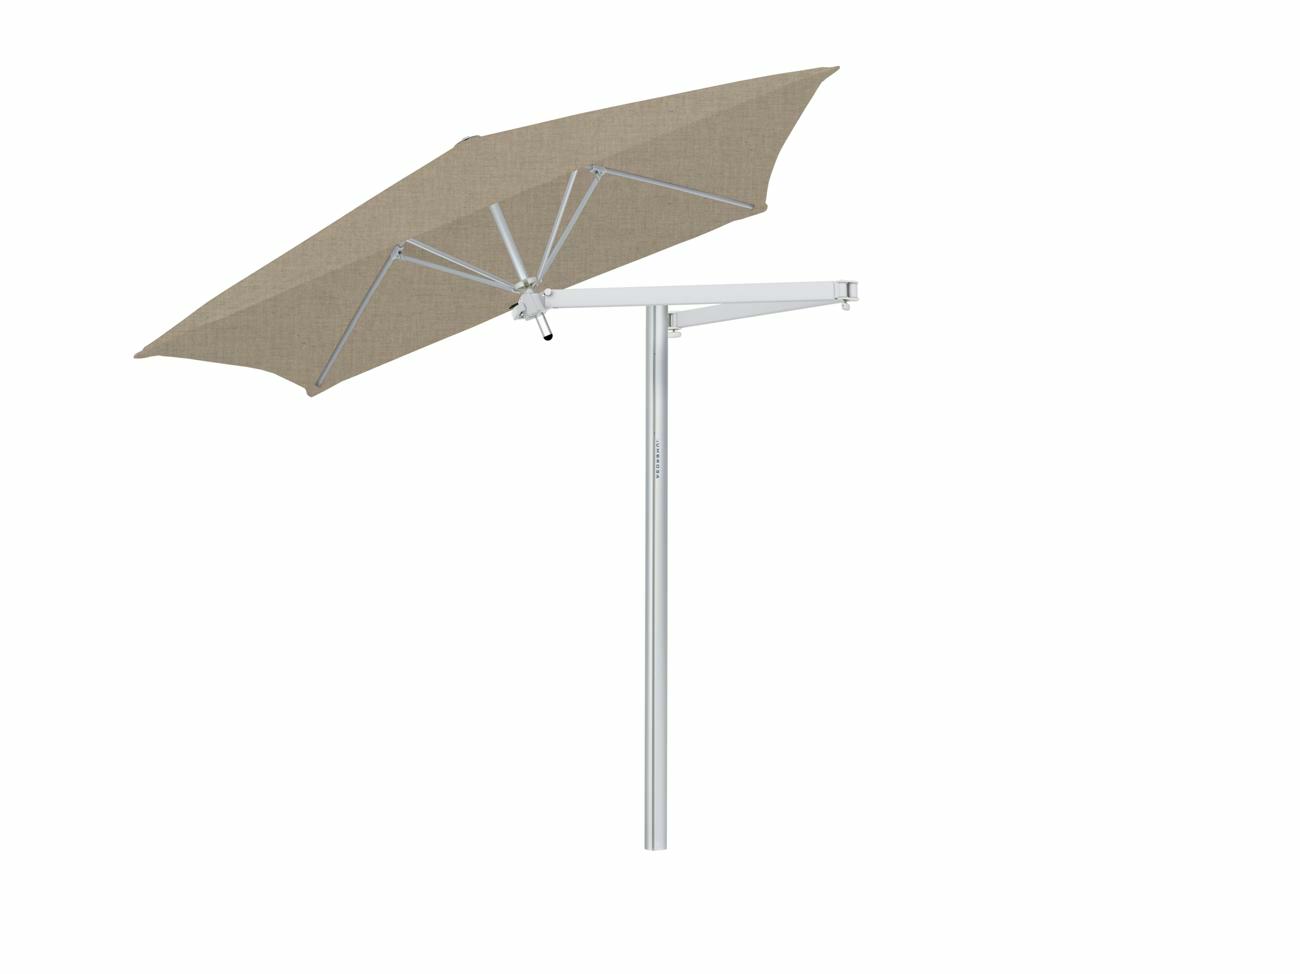 Paraflex cantilever umbrella square 1,9 m with Sand fabric and a Neo arm